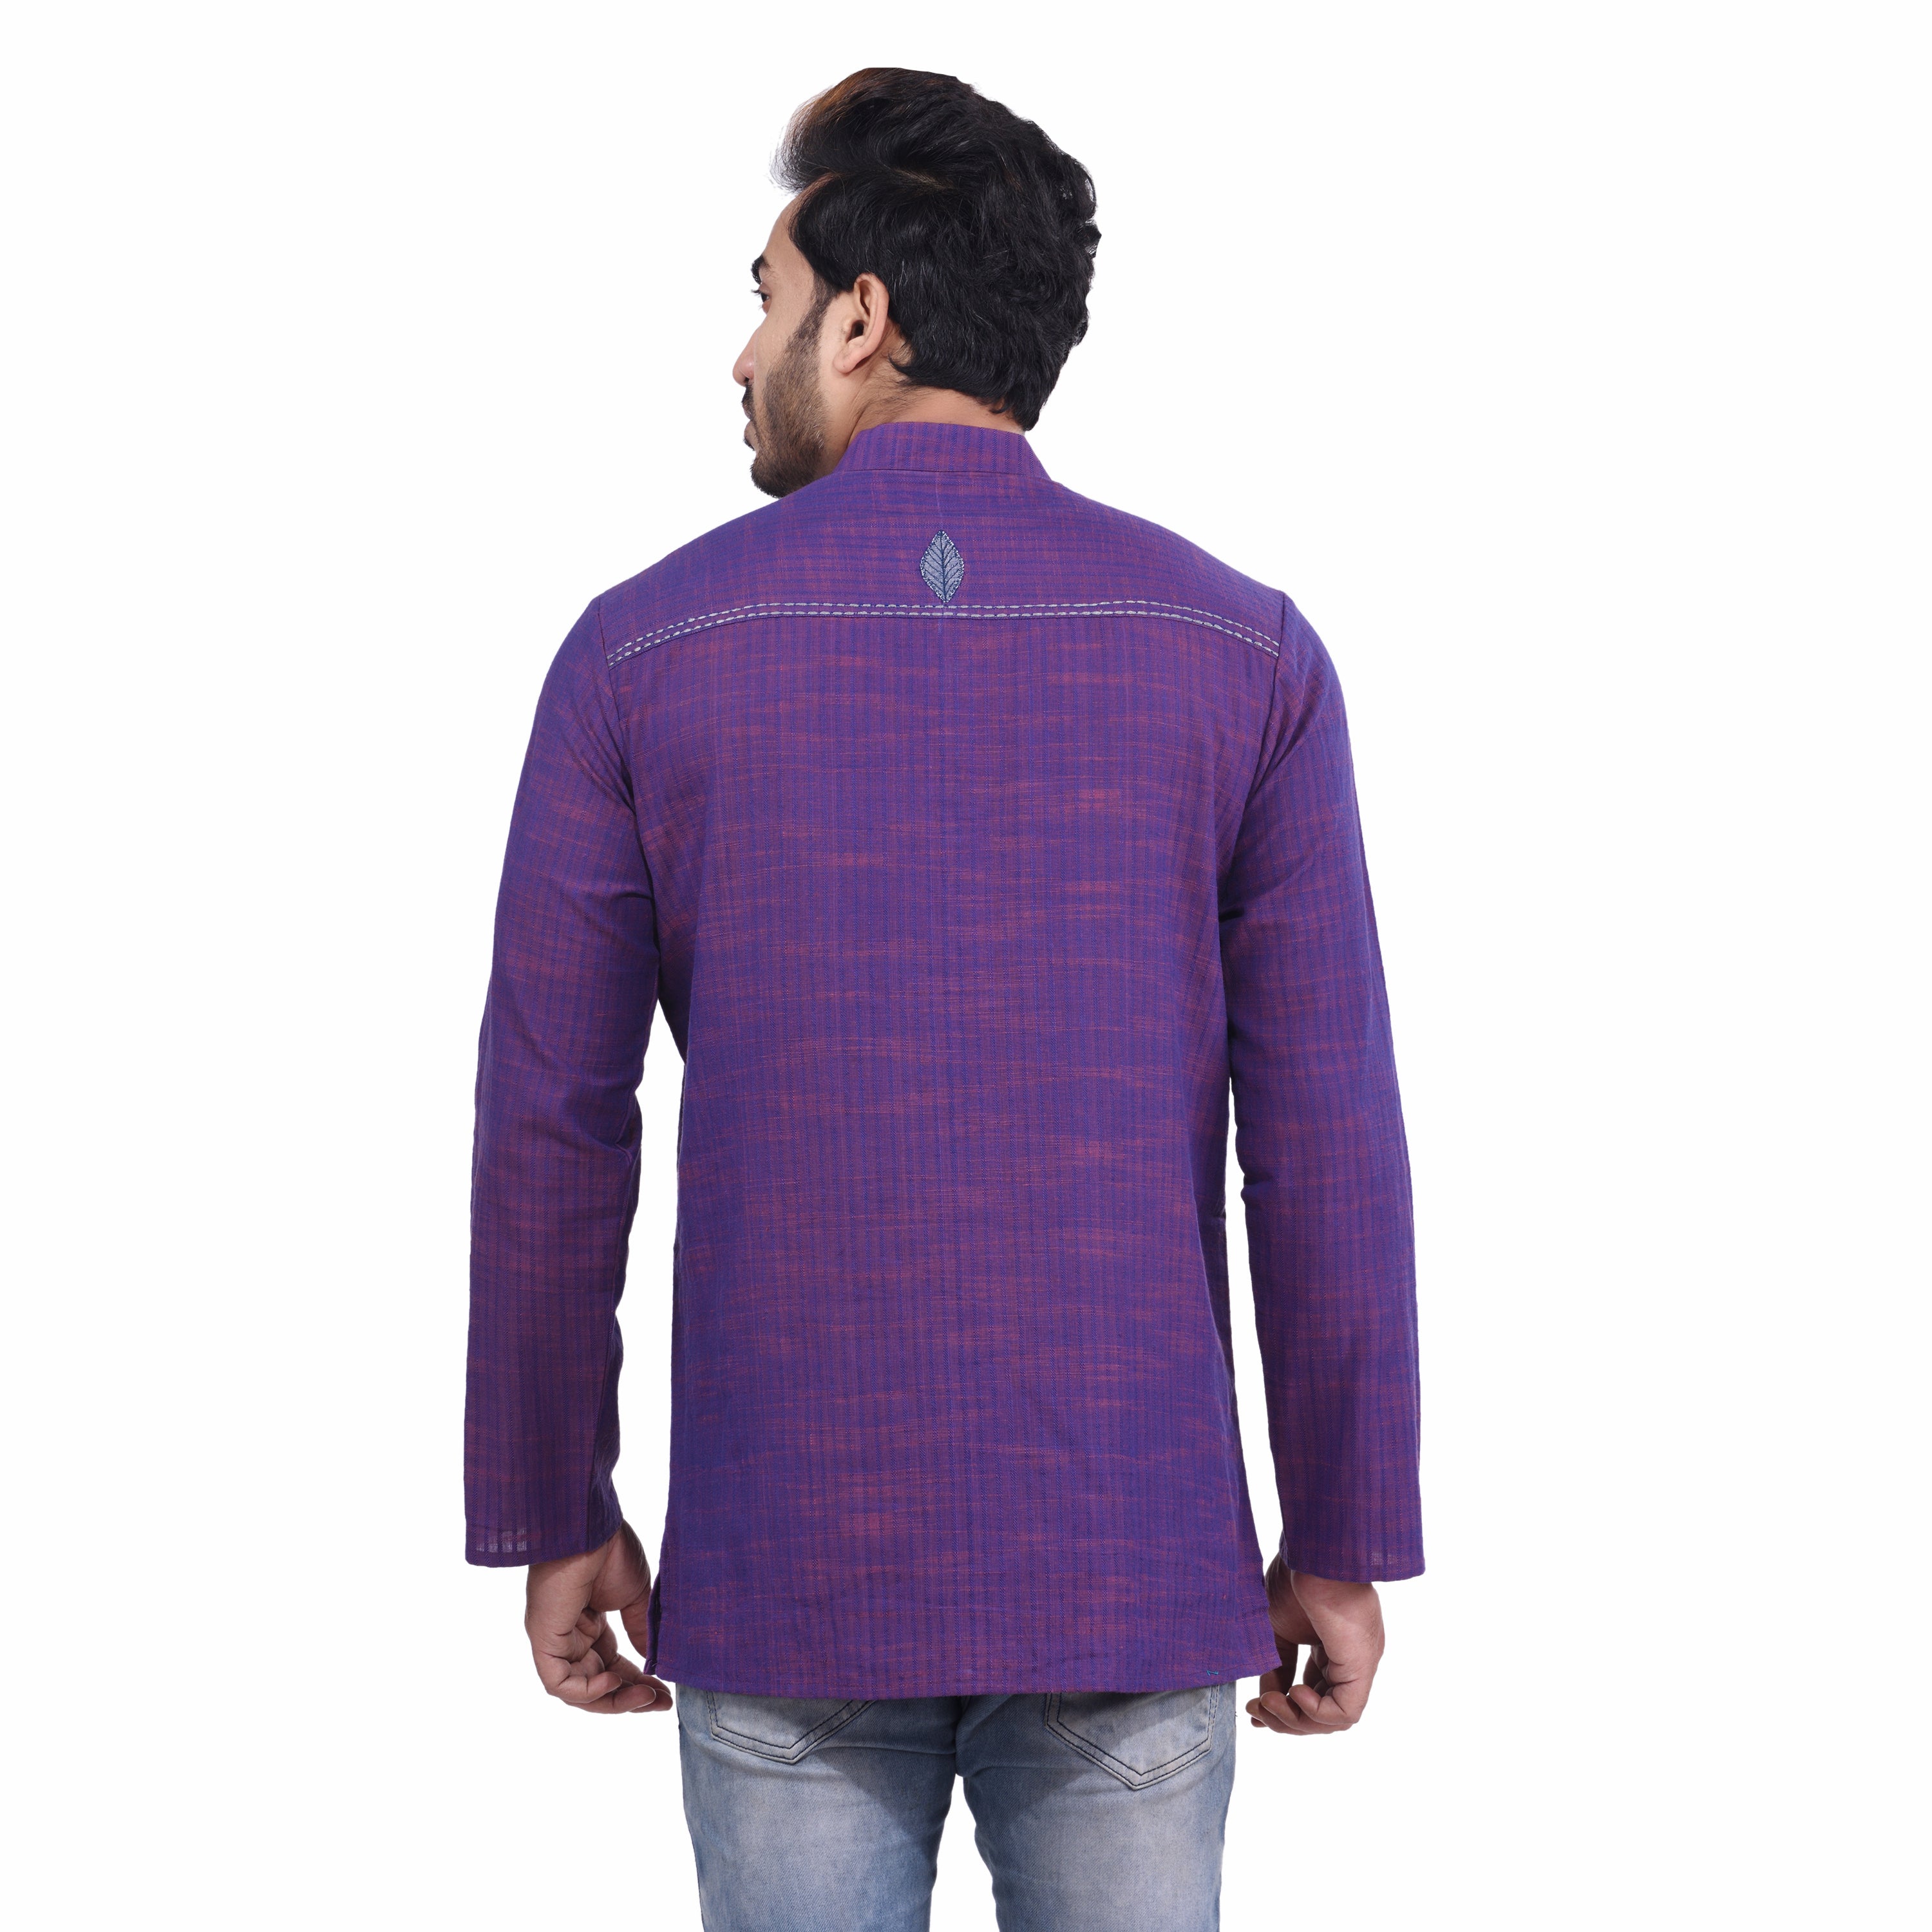 Purple Handloom Cotton self Stripe Patch work Men's Short Kurta